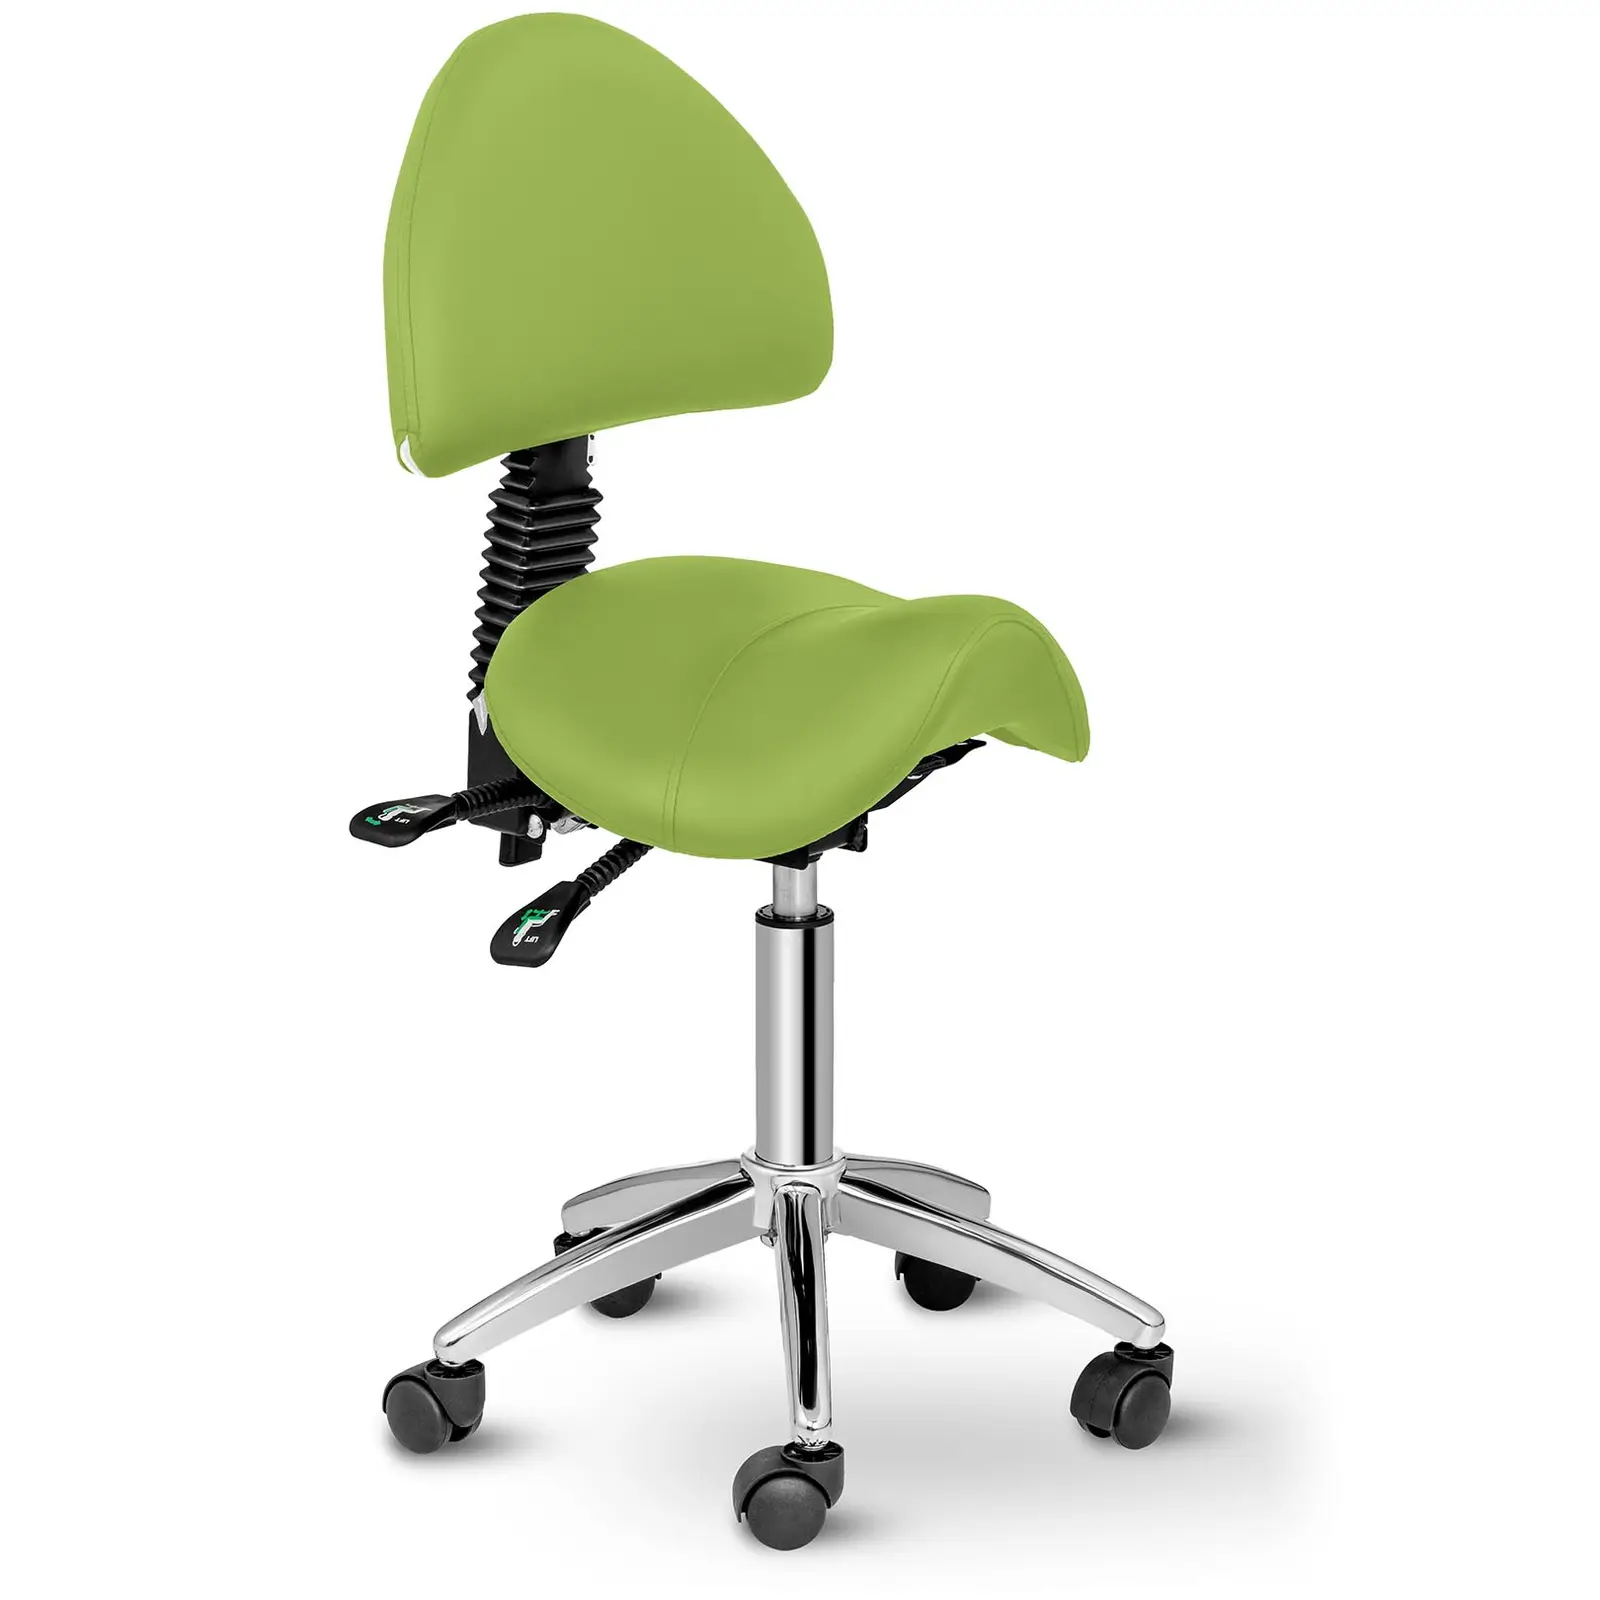 Stolica s naslonom za leđa - 550-690 mm - 150 kg - Light green